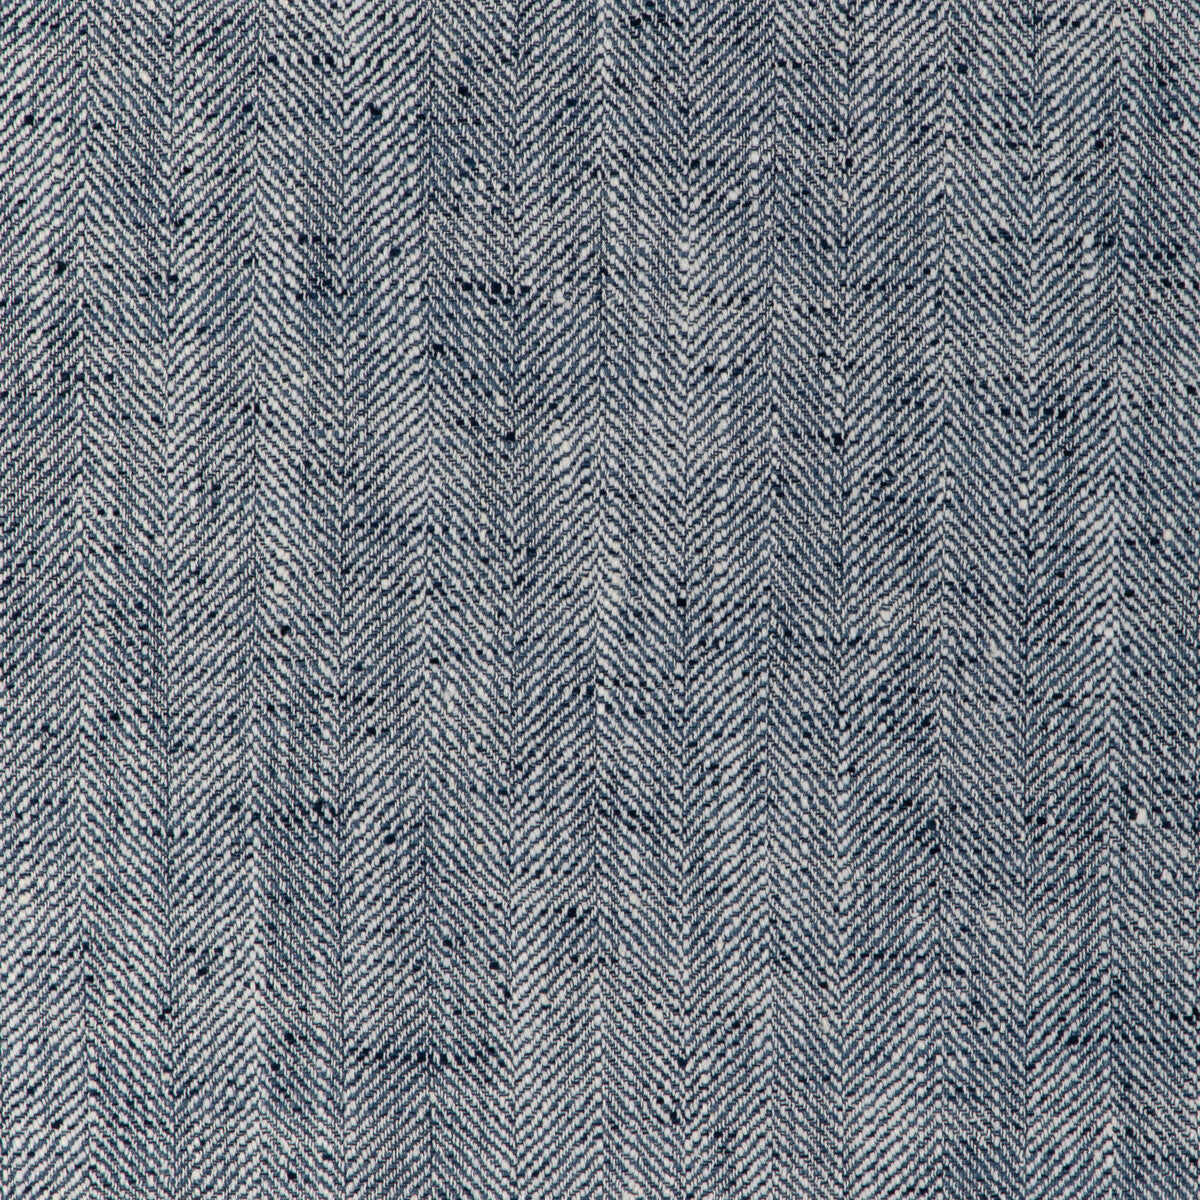 Kravet Smart fabric in 36674-51 color - pattern 36674.51.0 - by Kravet Smart in the Performance Kravetarmor collection